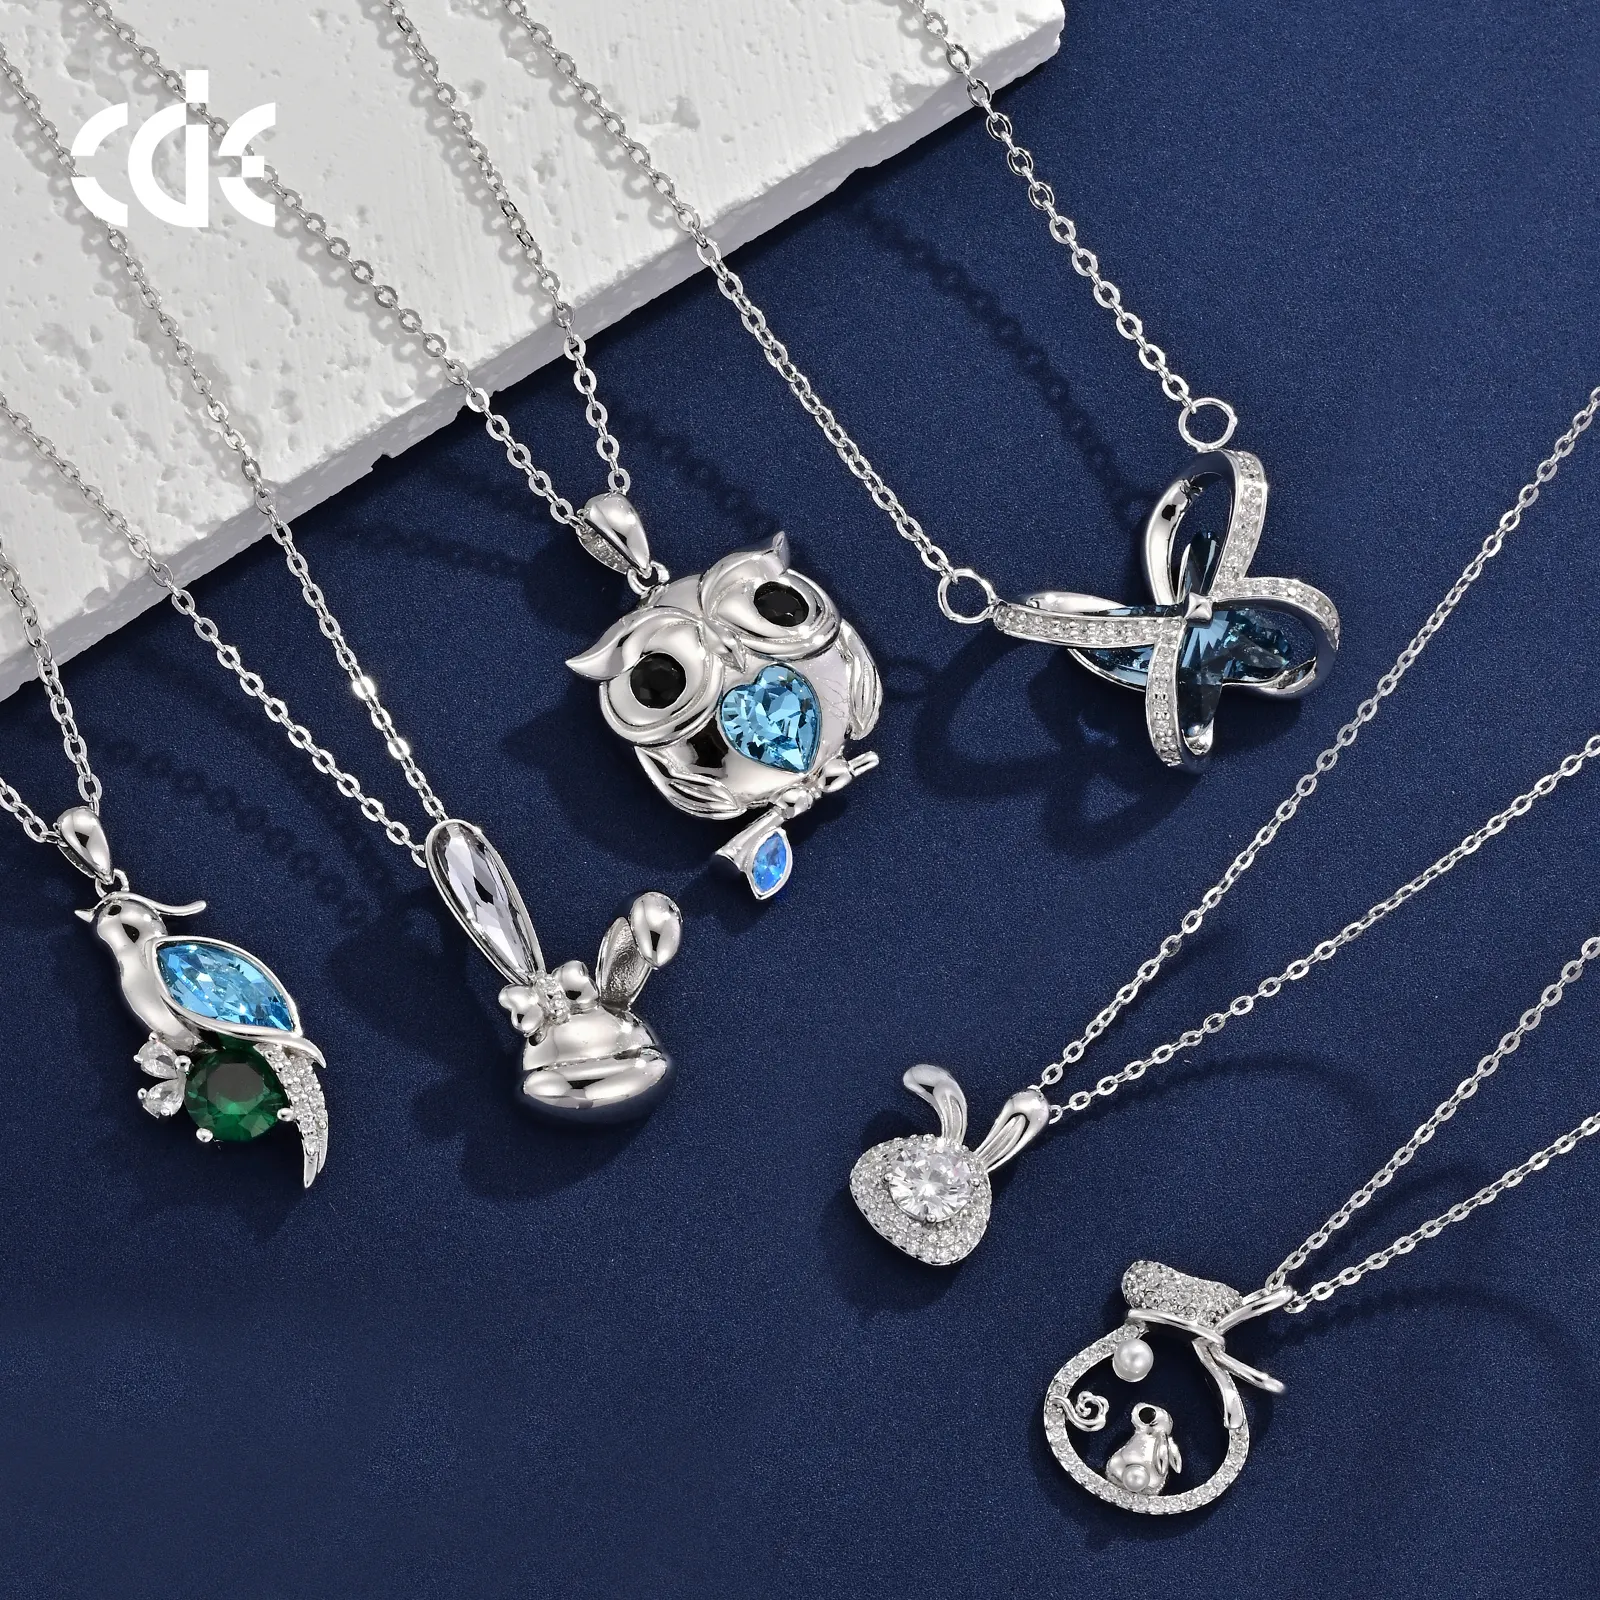 CDE SSYN006 perhiasan modis 925 perak murni kalung kristal biru grosir berkilau kupu-kupu kubik desain kalung